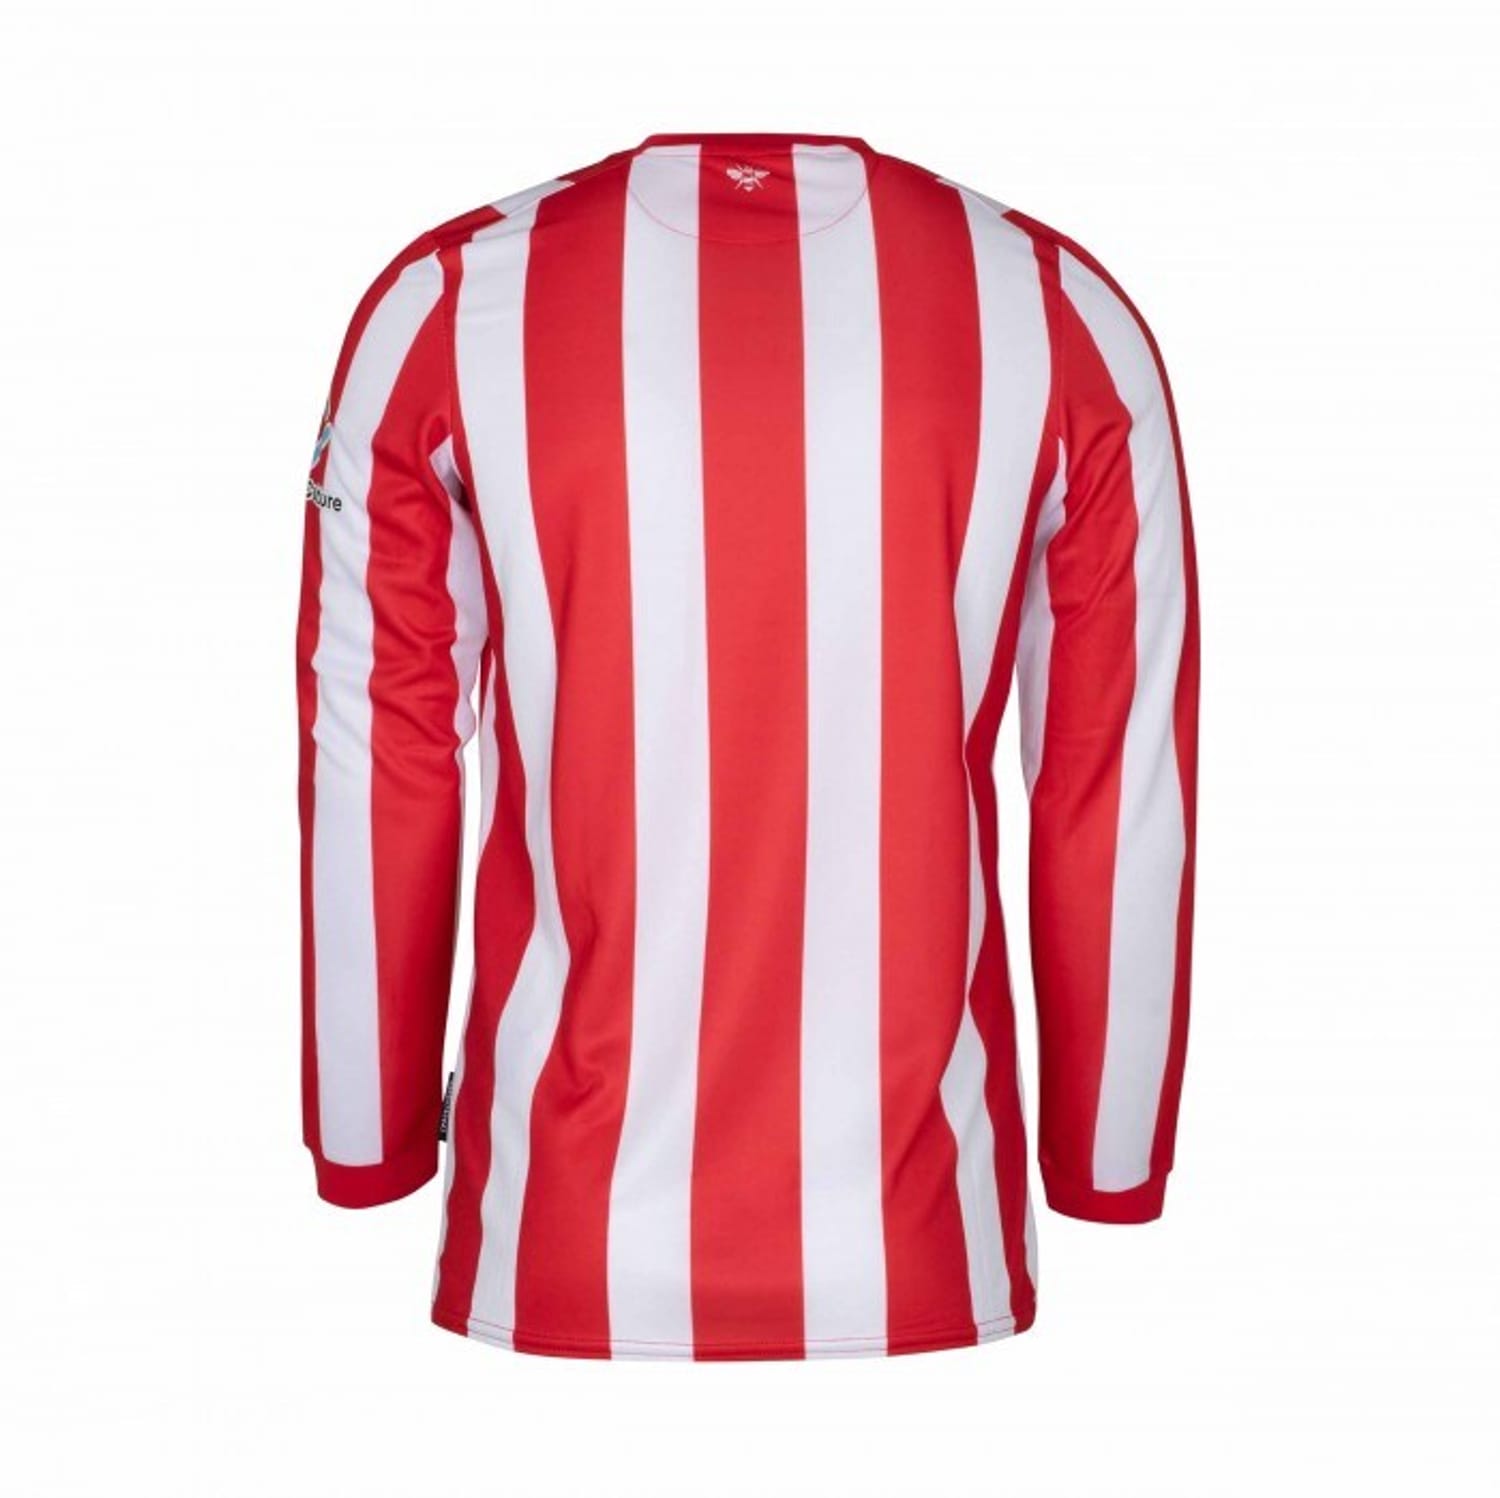 Premier League Brentford FC Home Jersey Shirt for Men